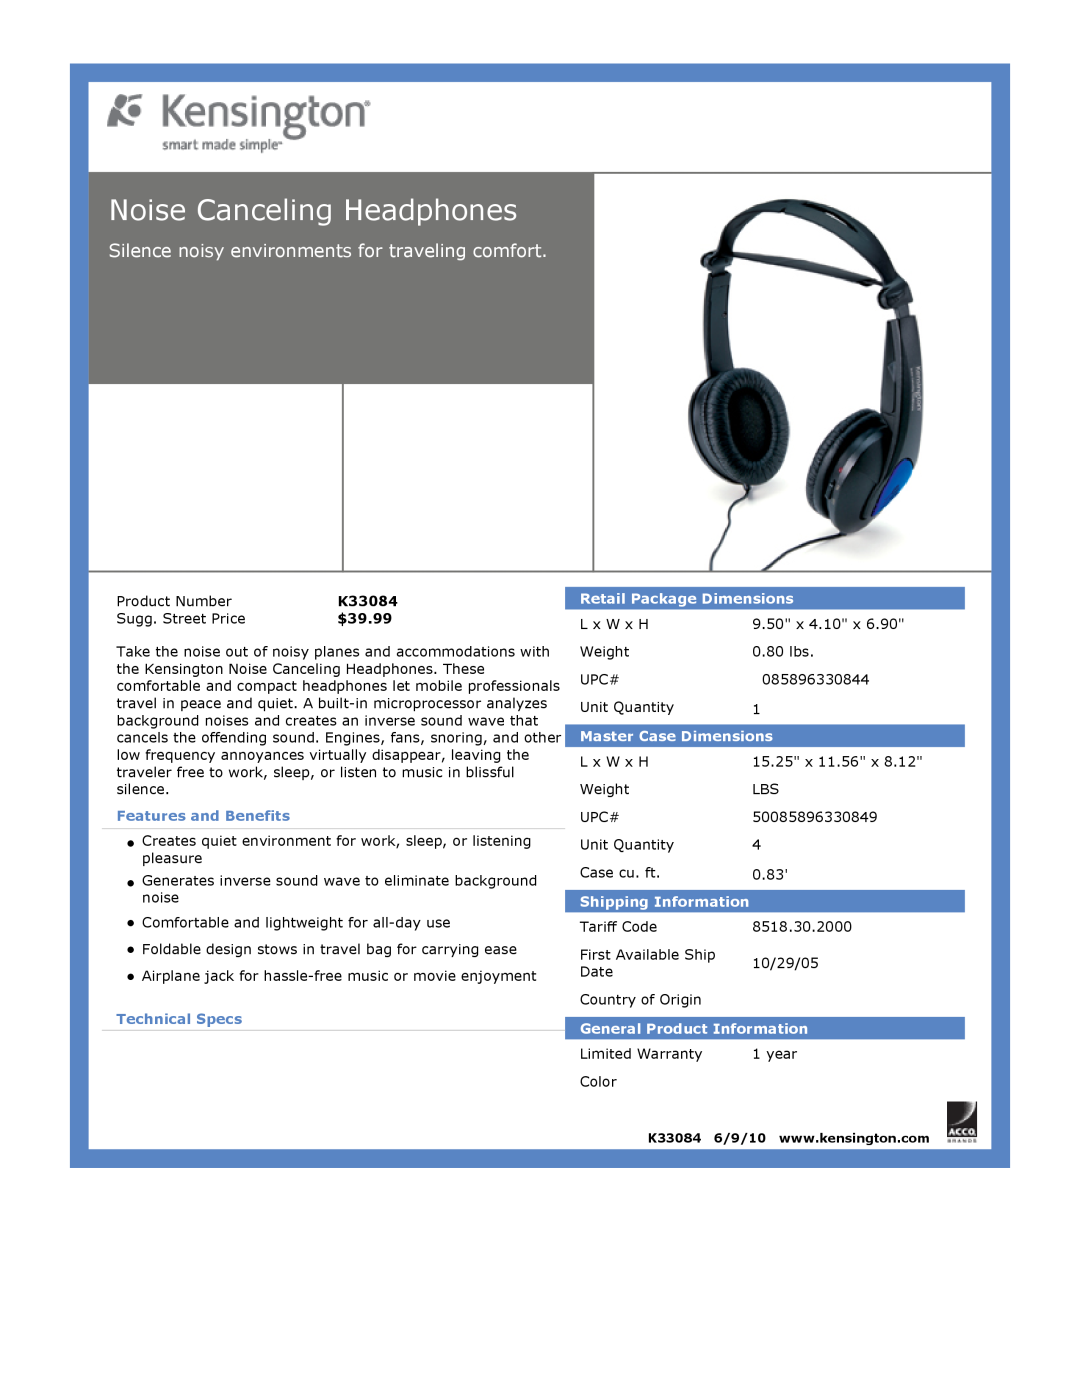 Kensington EU64325 Noise Canceling Headphones, Silence noisy environments for traveling comfort, $39.99, Technical Specs 